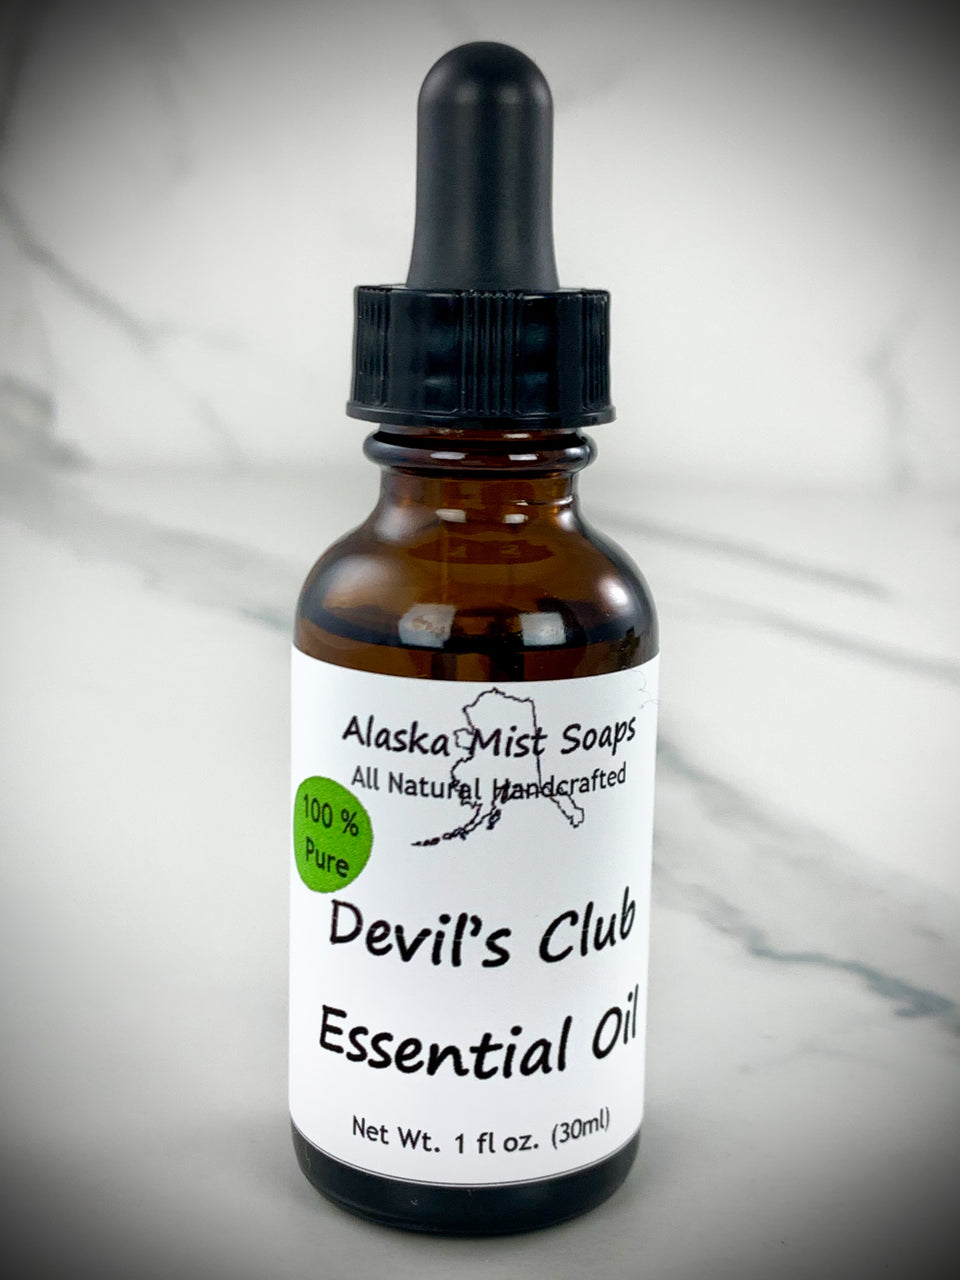 Devil's Club Essential Oil